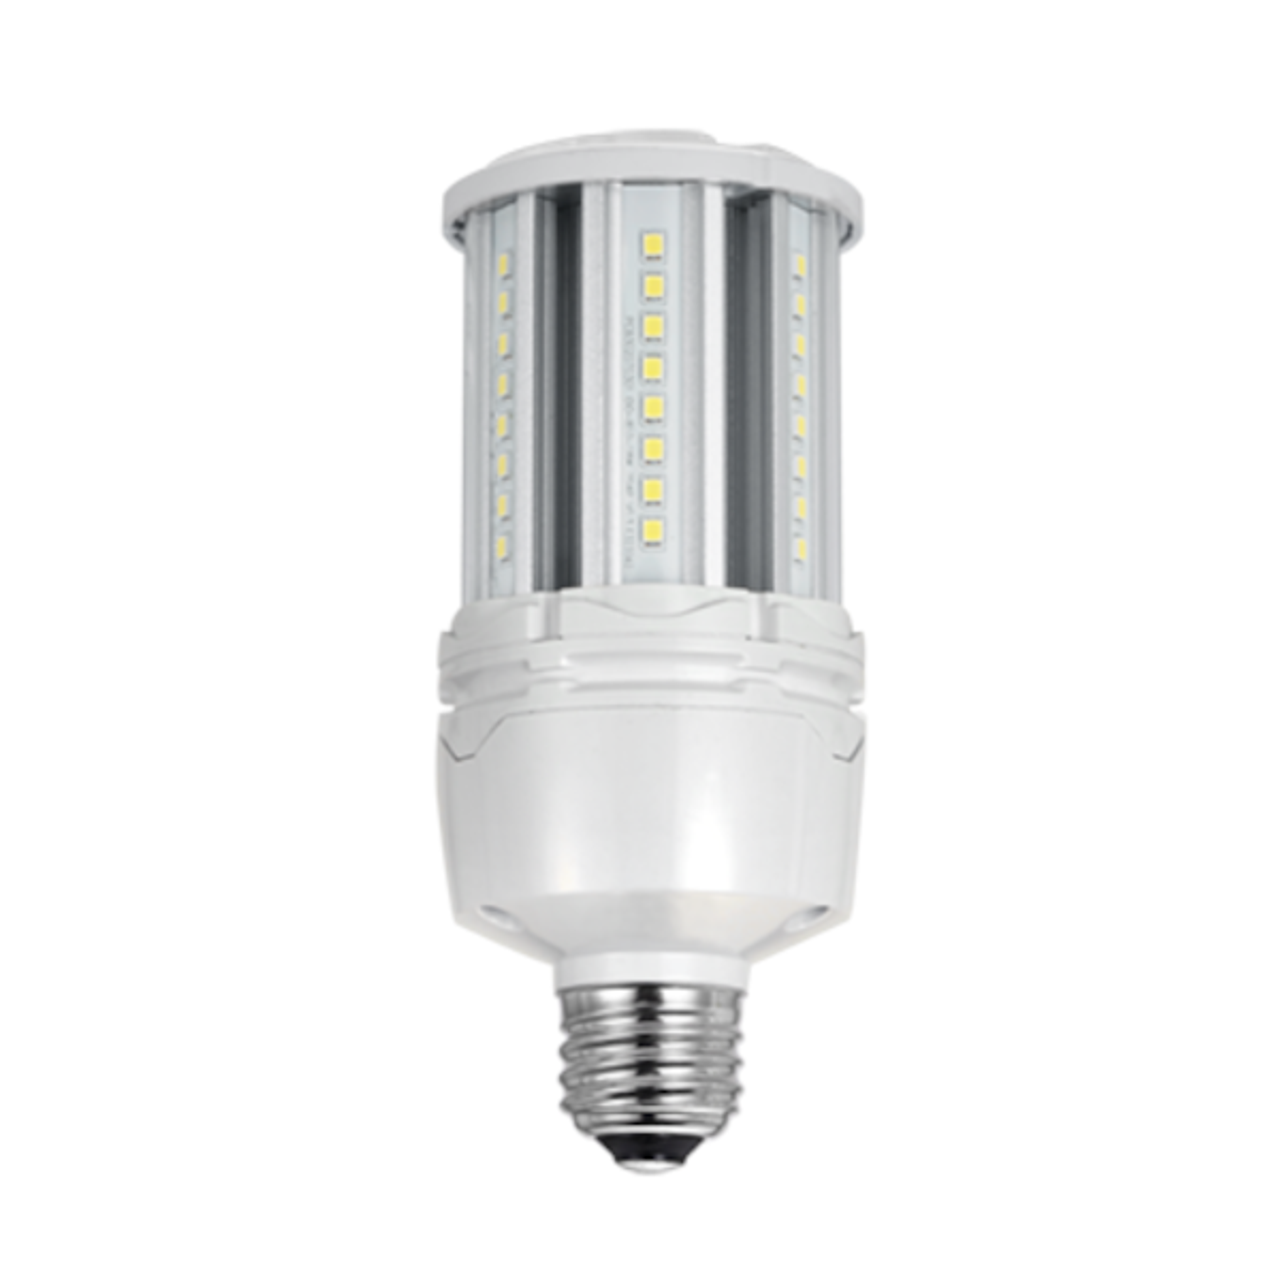 Tungsram 18W LED HID Corn Lamp ES 6500K Passive Cooling